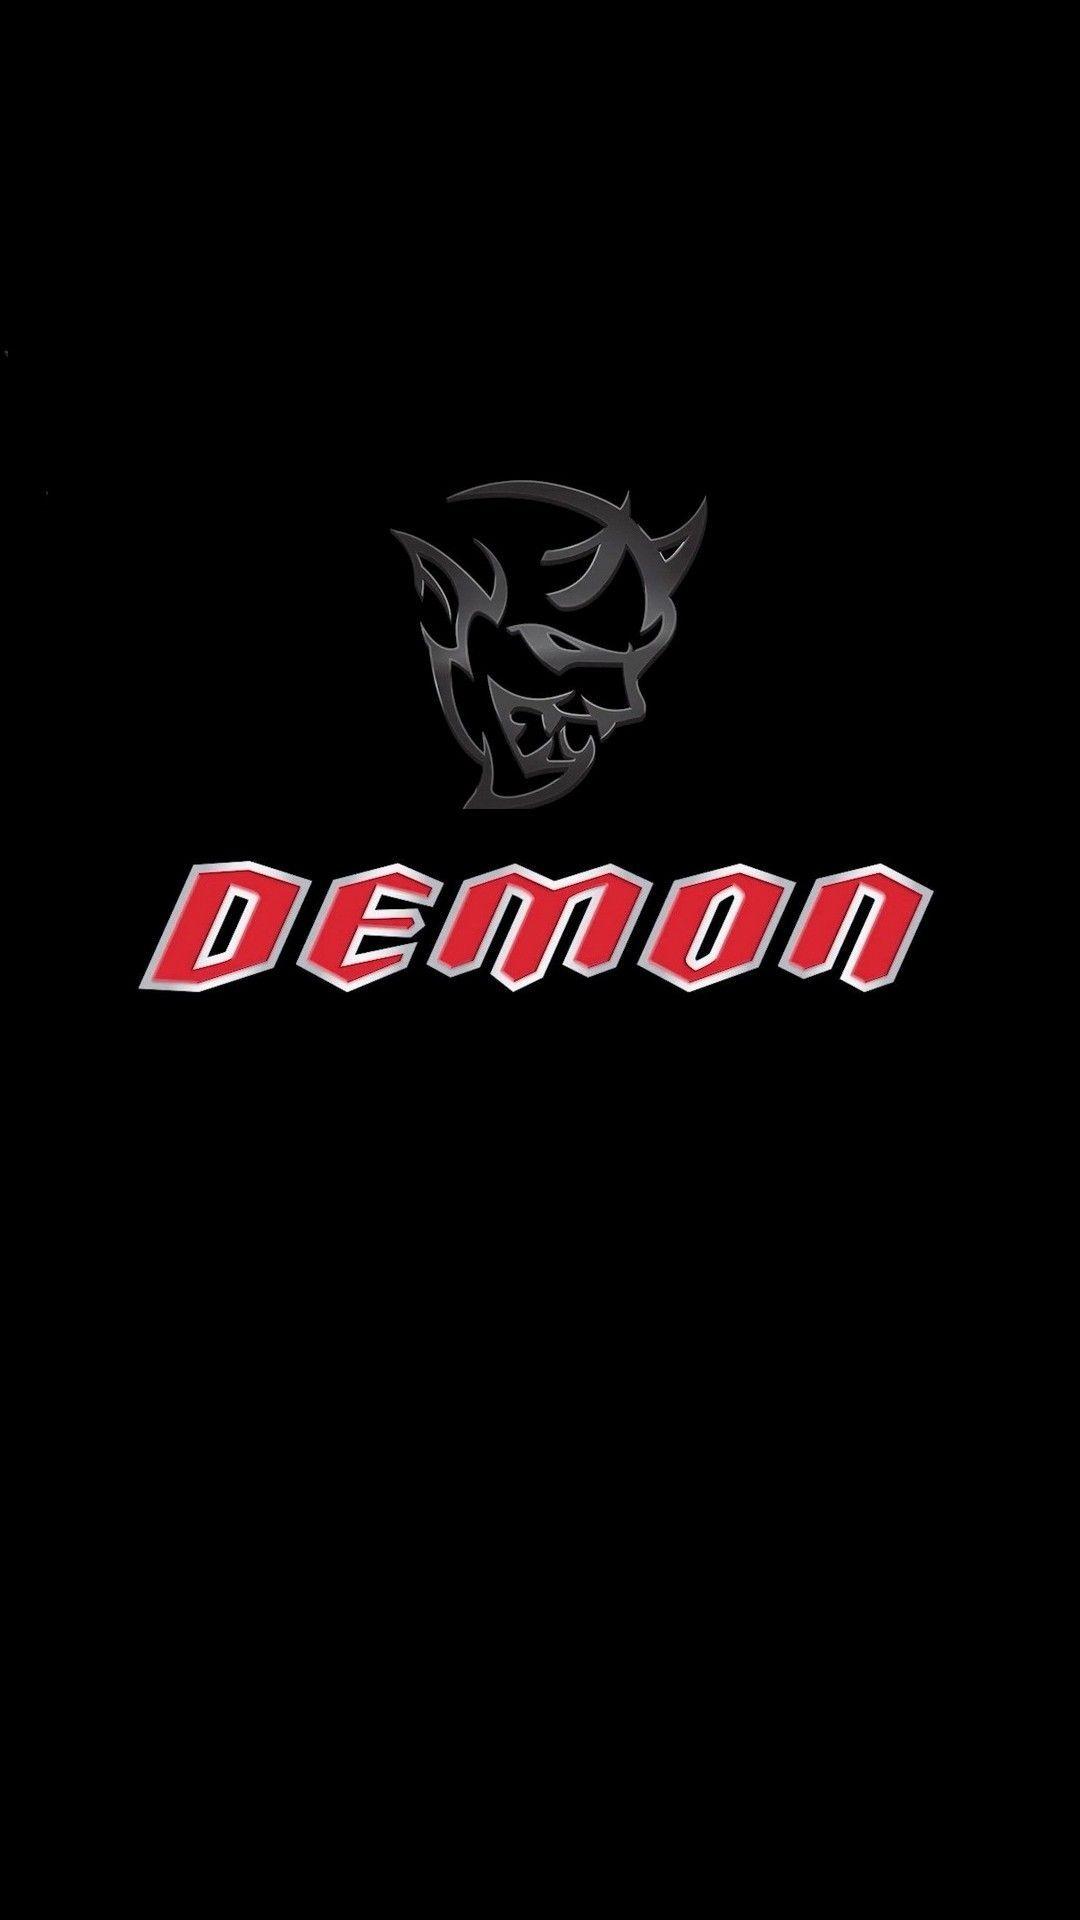 Dodge Demon Logo - Dodge Demon Logo iPhone Wallpaper. iPhoneWallpaper. Dodge, Cars